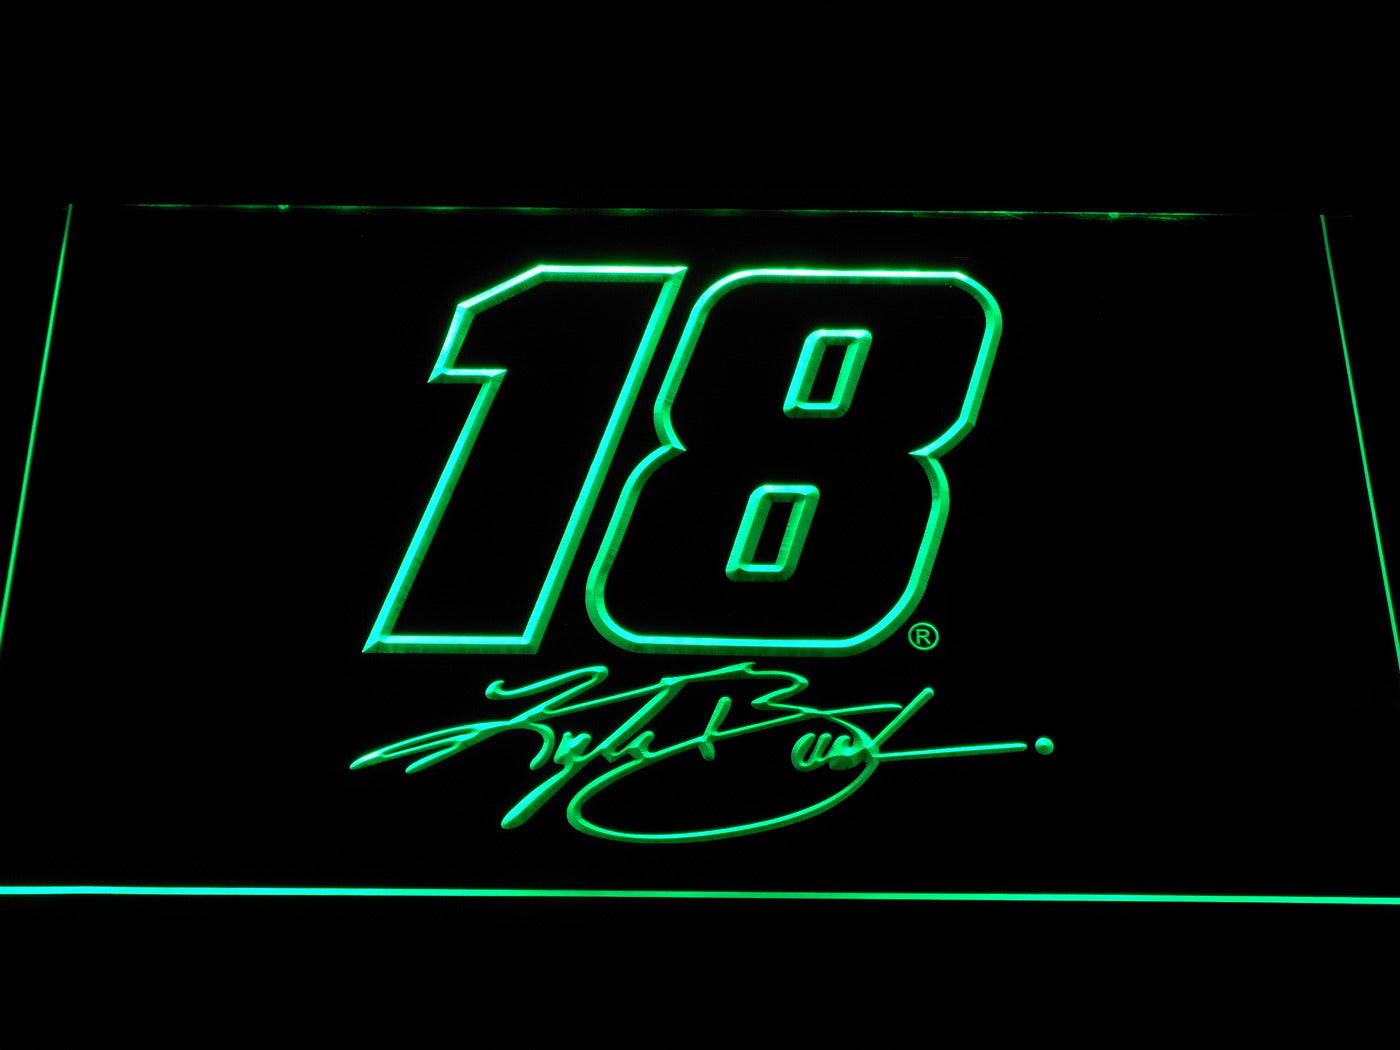 Kyle Busch Signature 18 Neon Light LED Sign